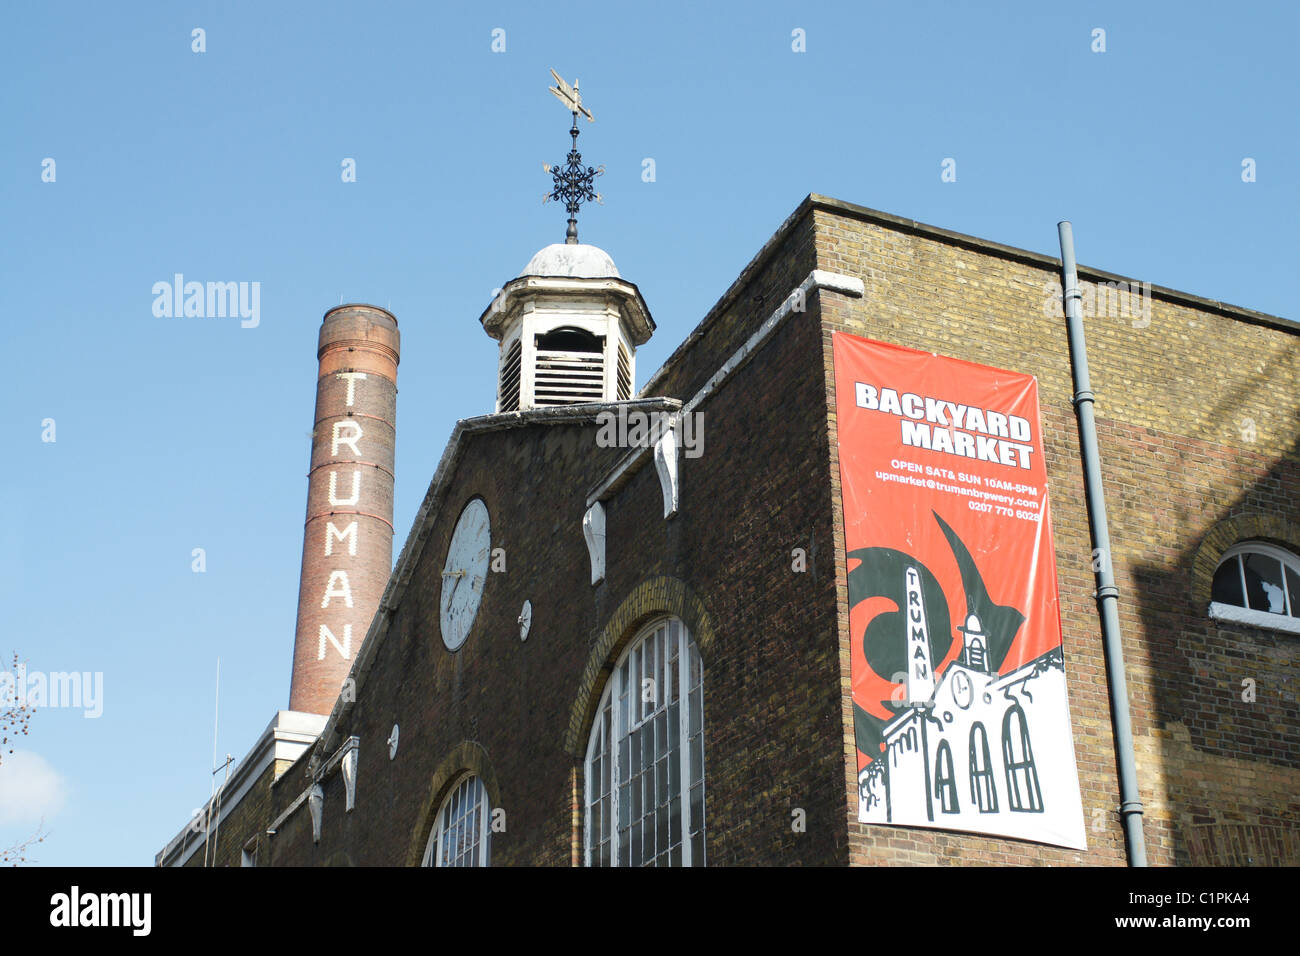 Old Truman Brewery, Brick Lane London E1 Stock Photo